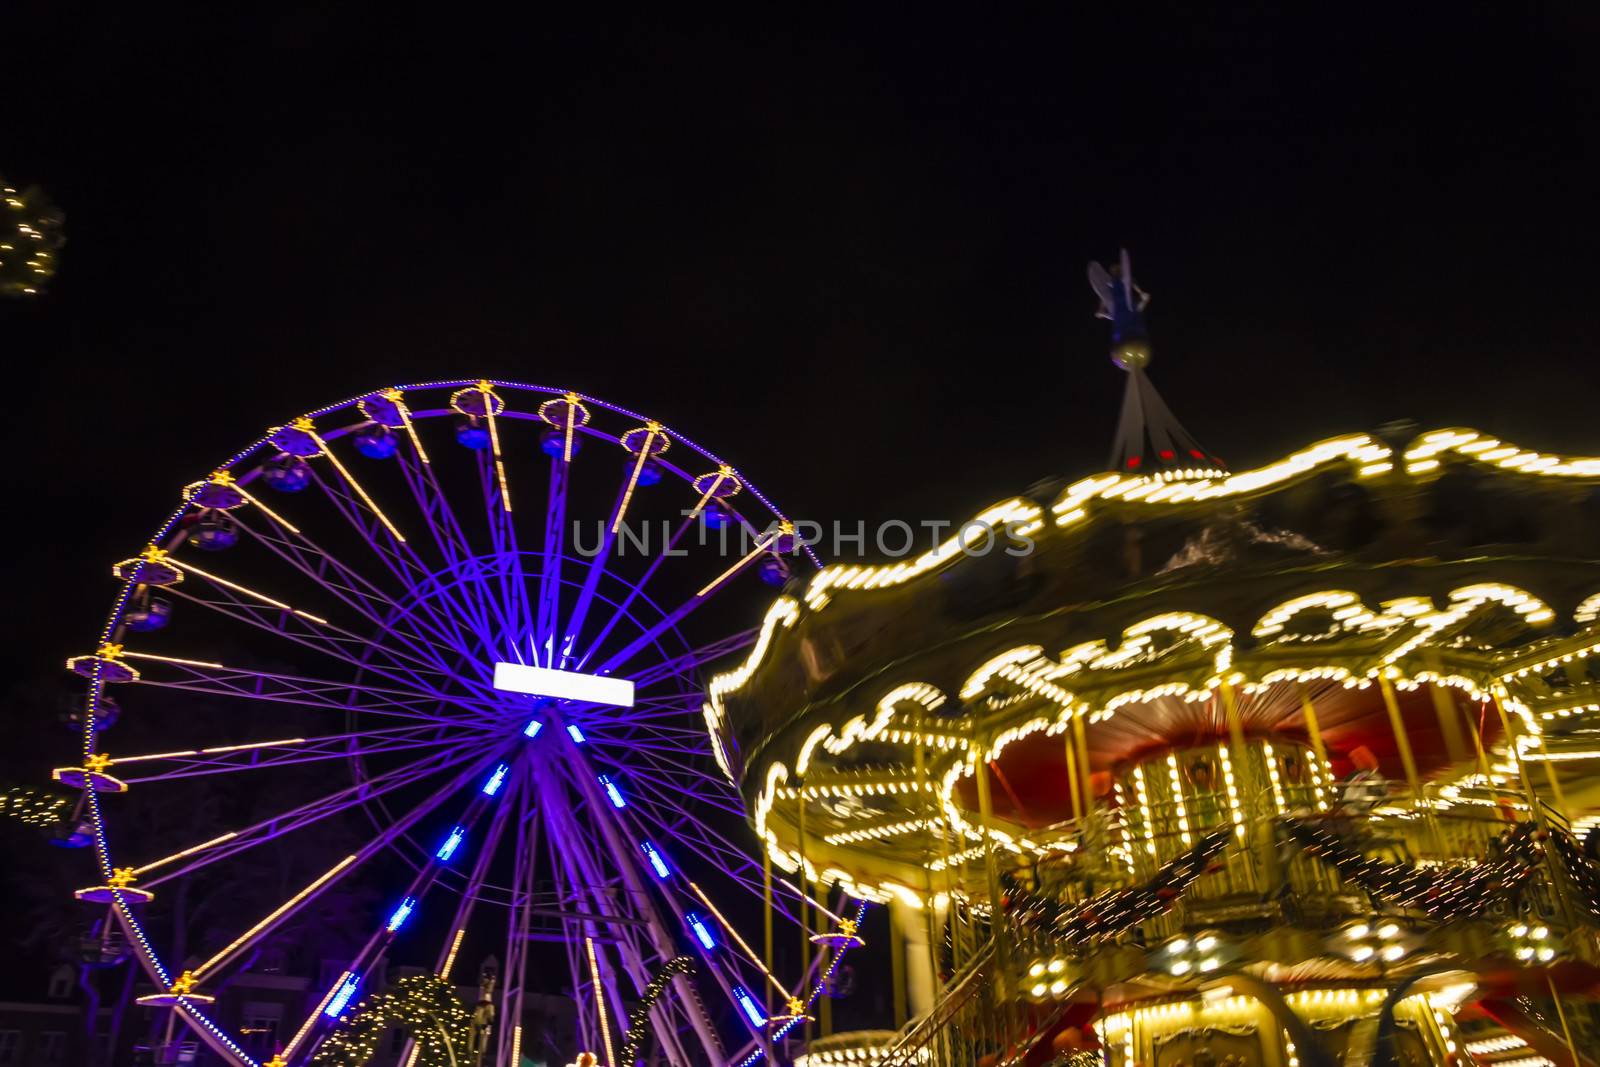 Turning Ferris wheel on achristmas market, Maastricht, the Netherlands